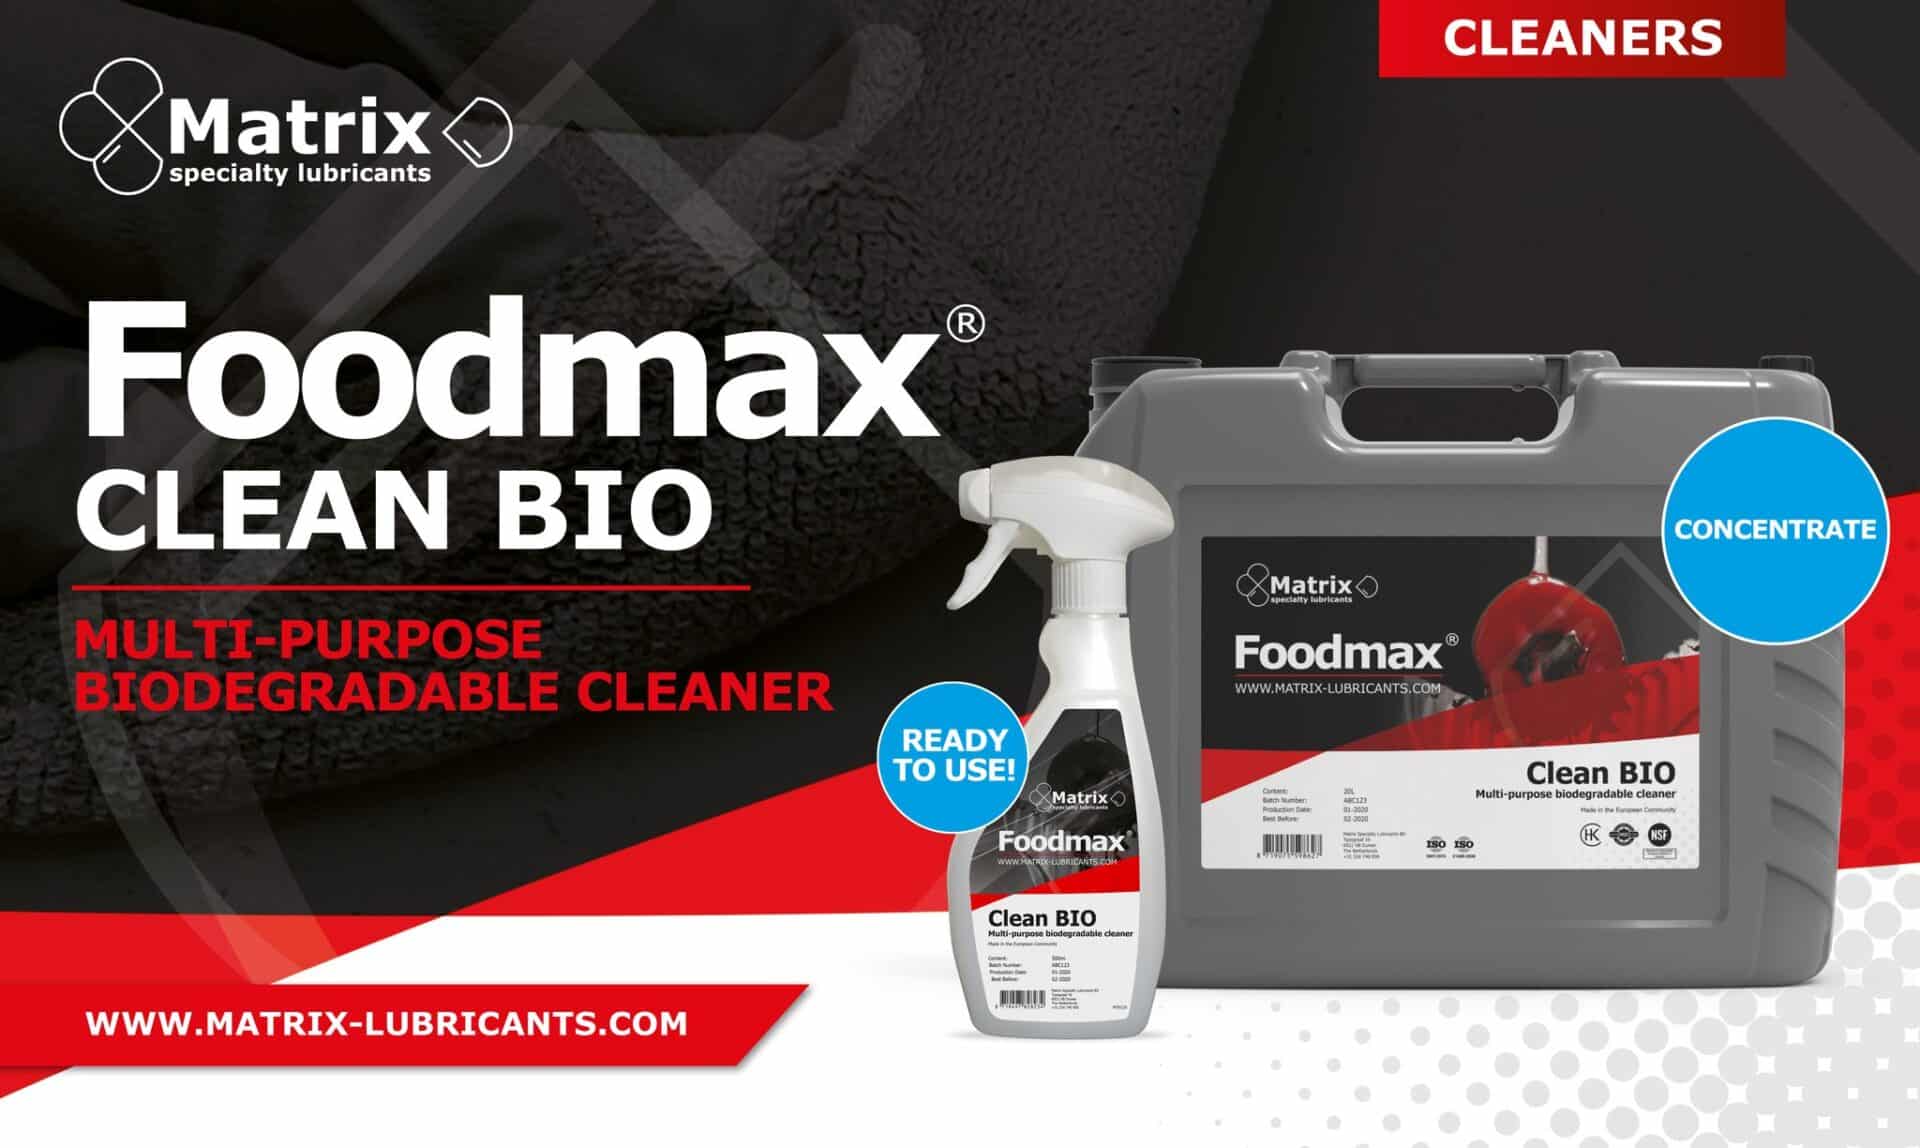 Matrix specialty lubricants' Foodmax Clean Bio multi-purpose biodegradable cleaner